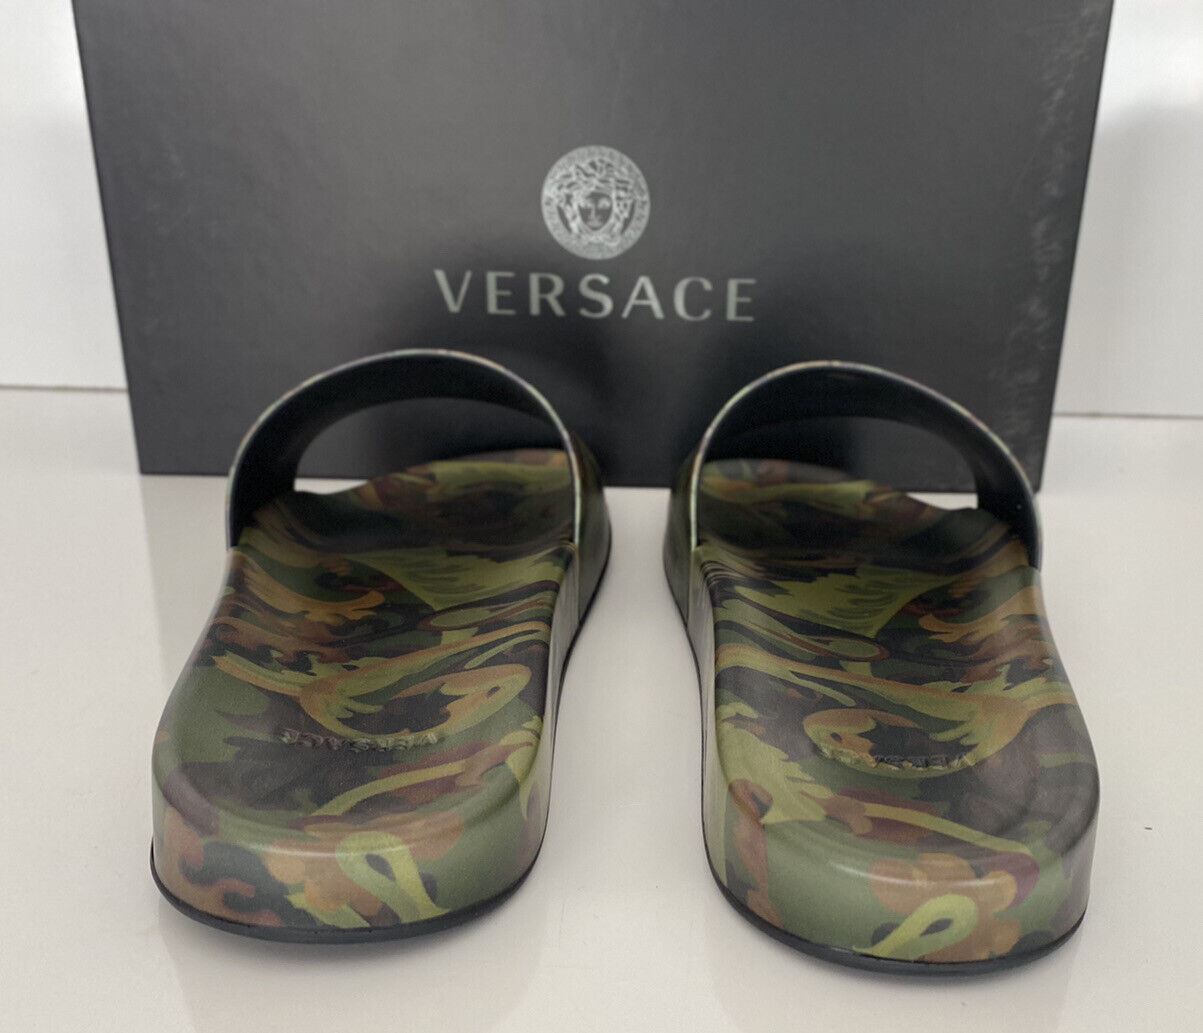 Сандалии-шлепанцы Versace Baroccoflage, цвет хаки 9, США, 395 долларов США (42 евро), IT DSU6516 